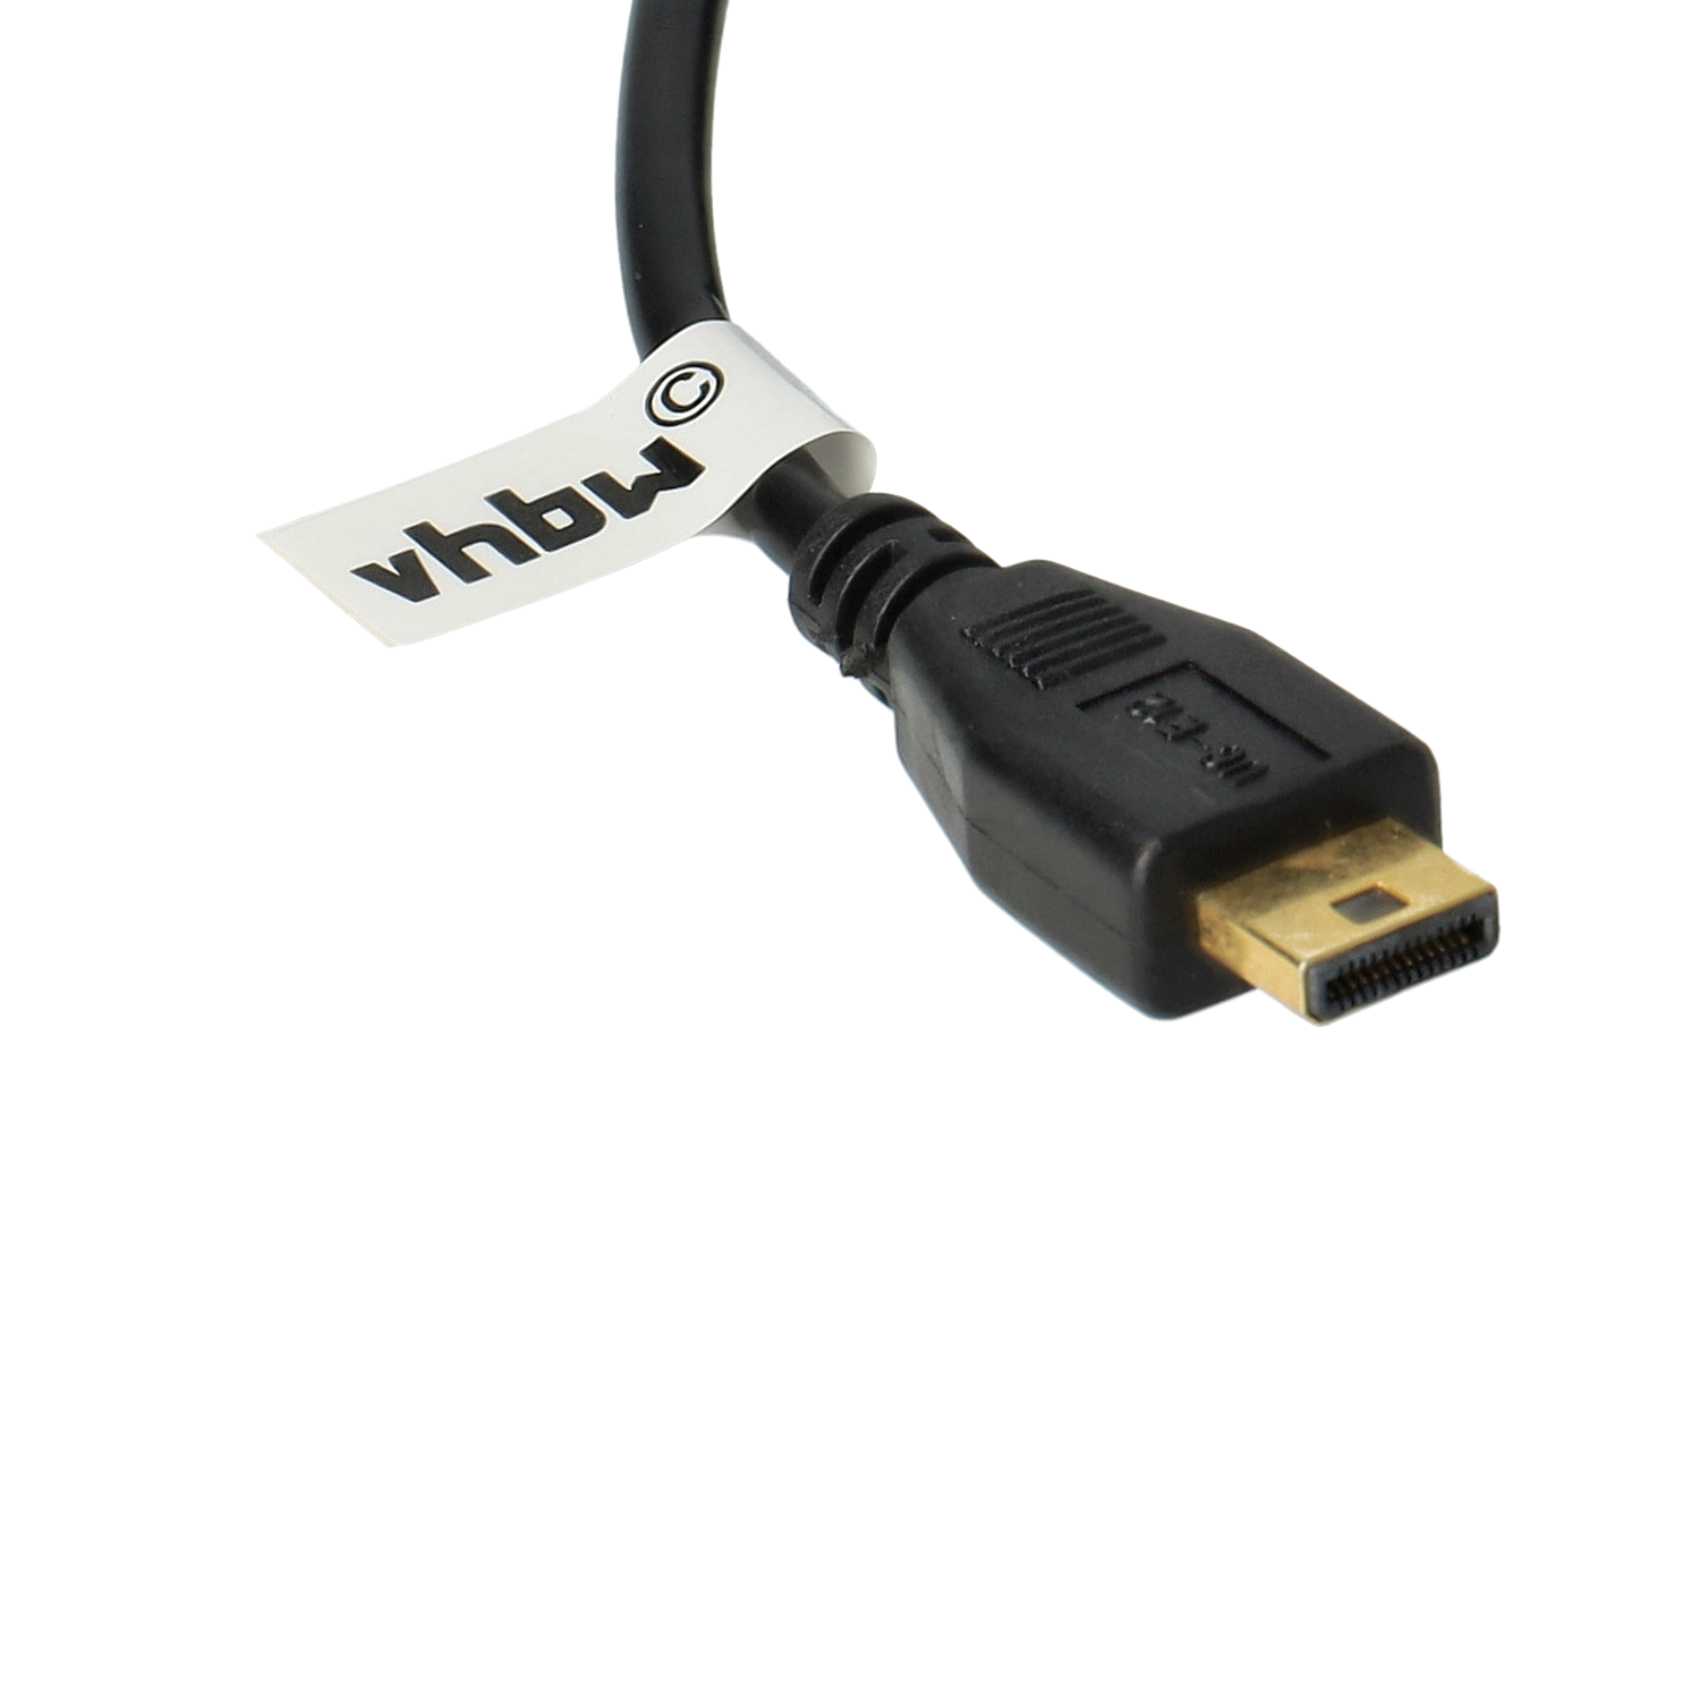 USB Data Cable replaces Nikon UC-E12 for Nikon Camera - 150 cm